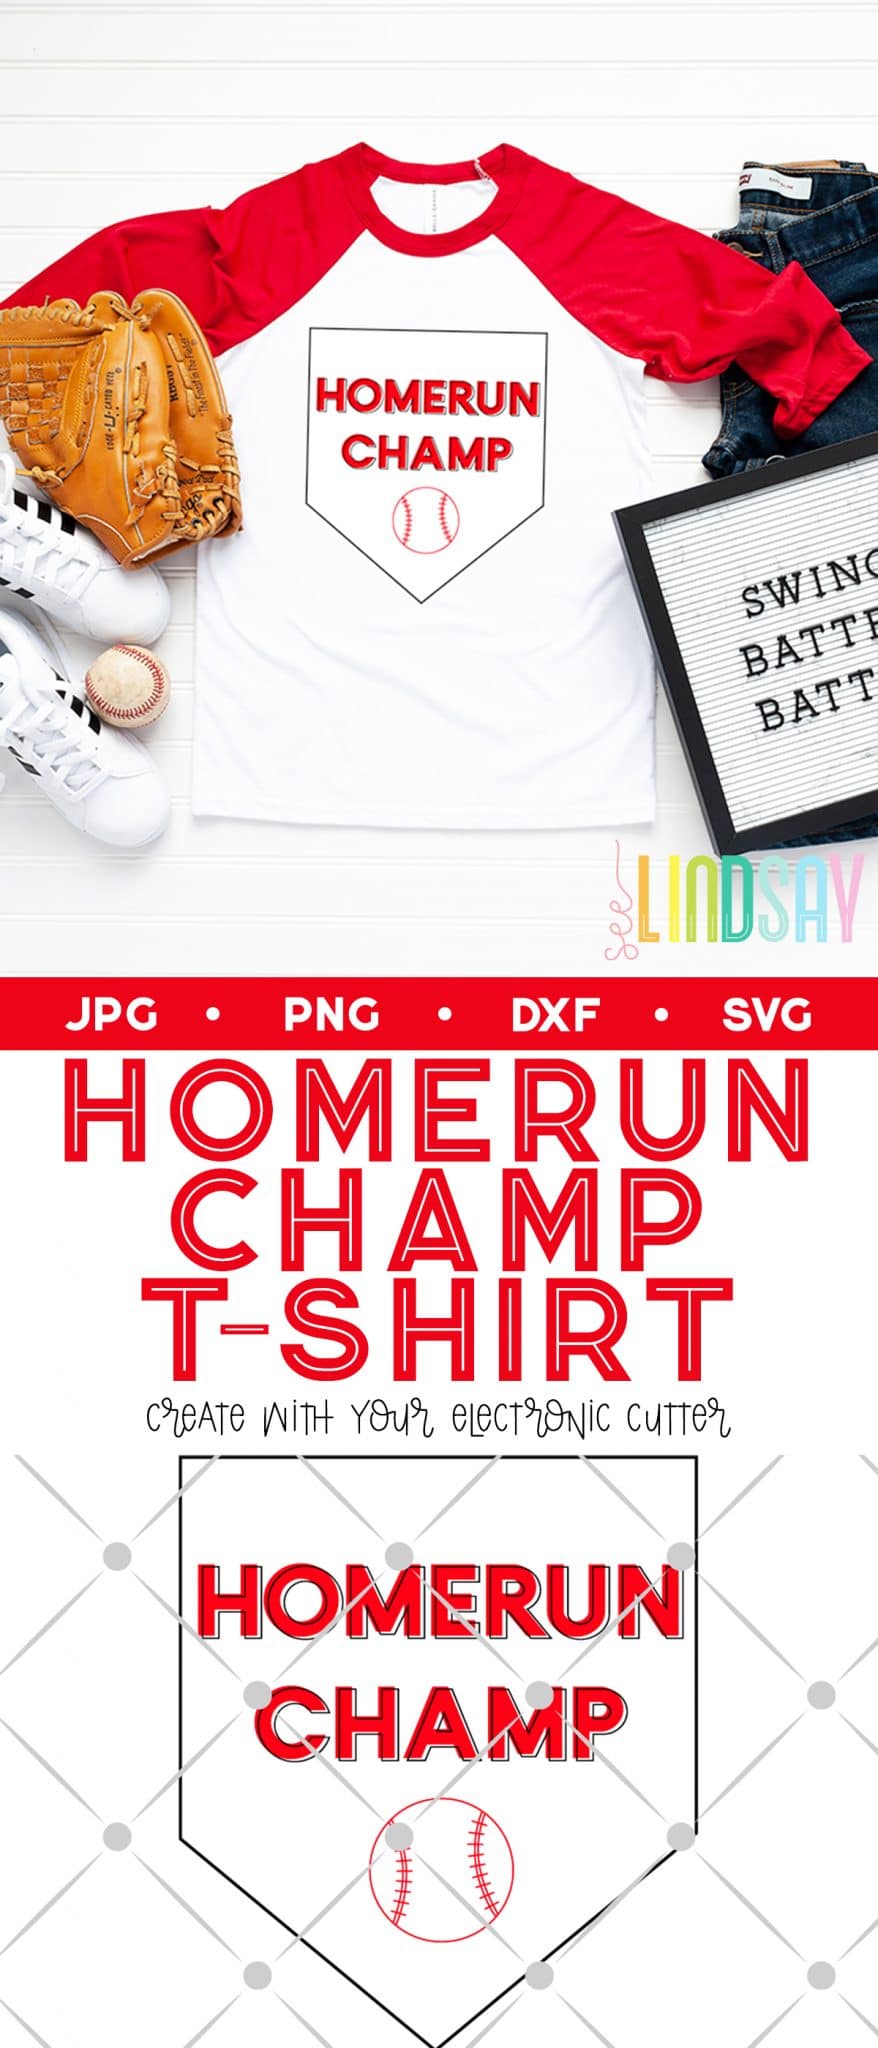 Download Free Baseball Svg Files Homerun Champ Shirt Seelindsay